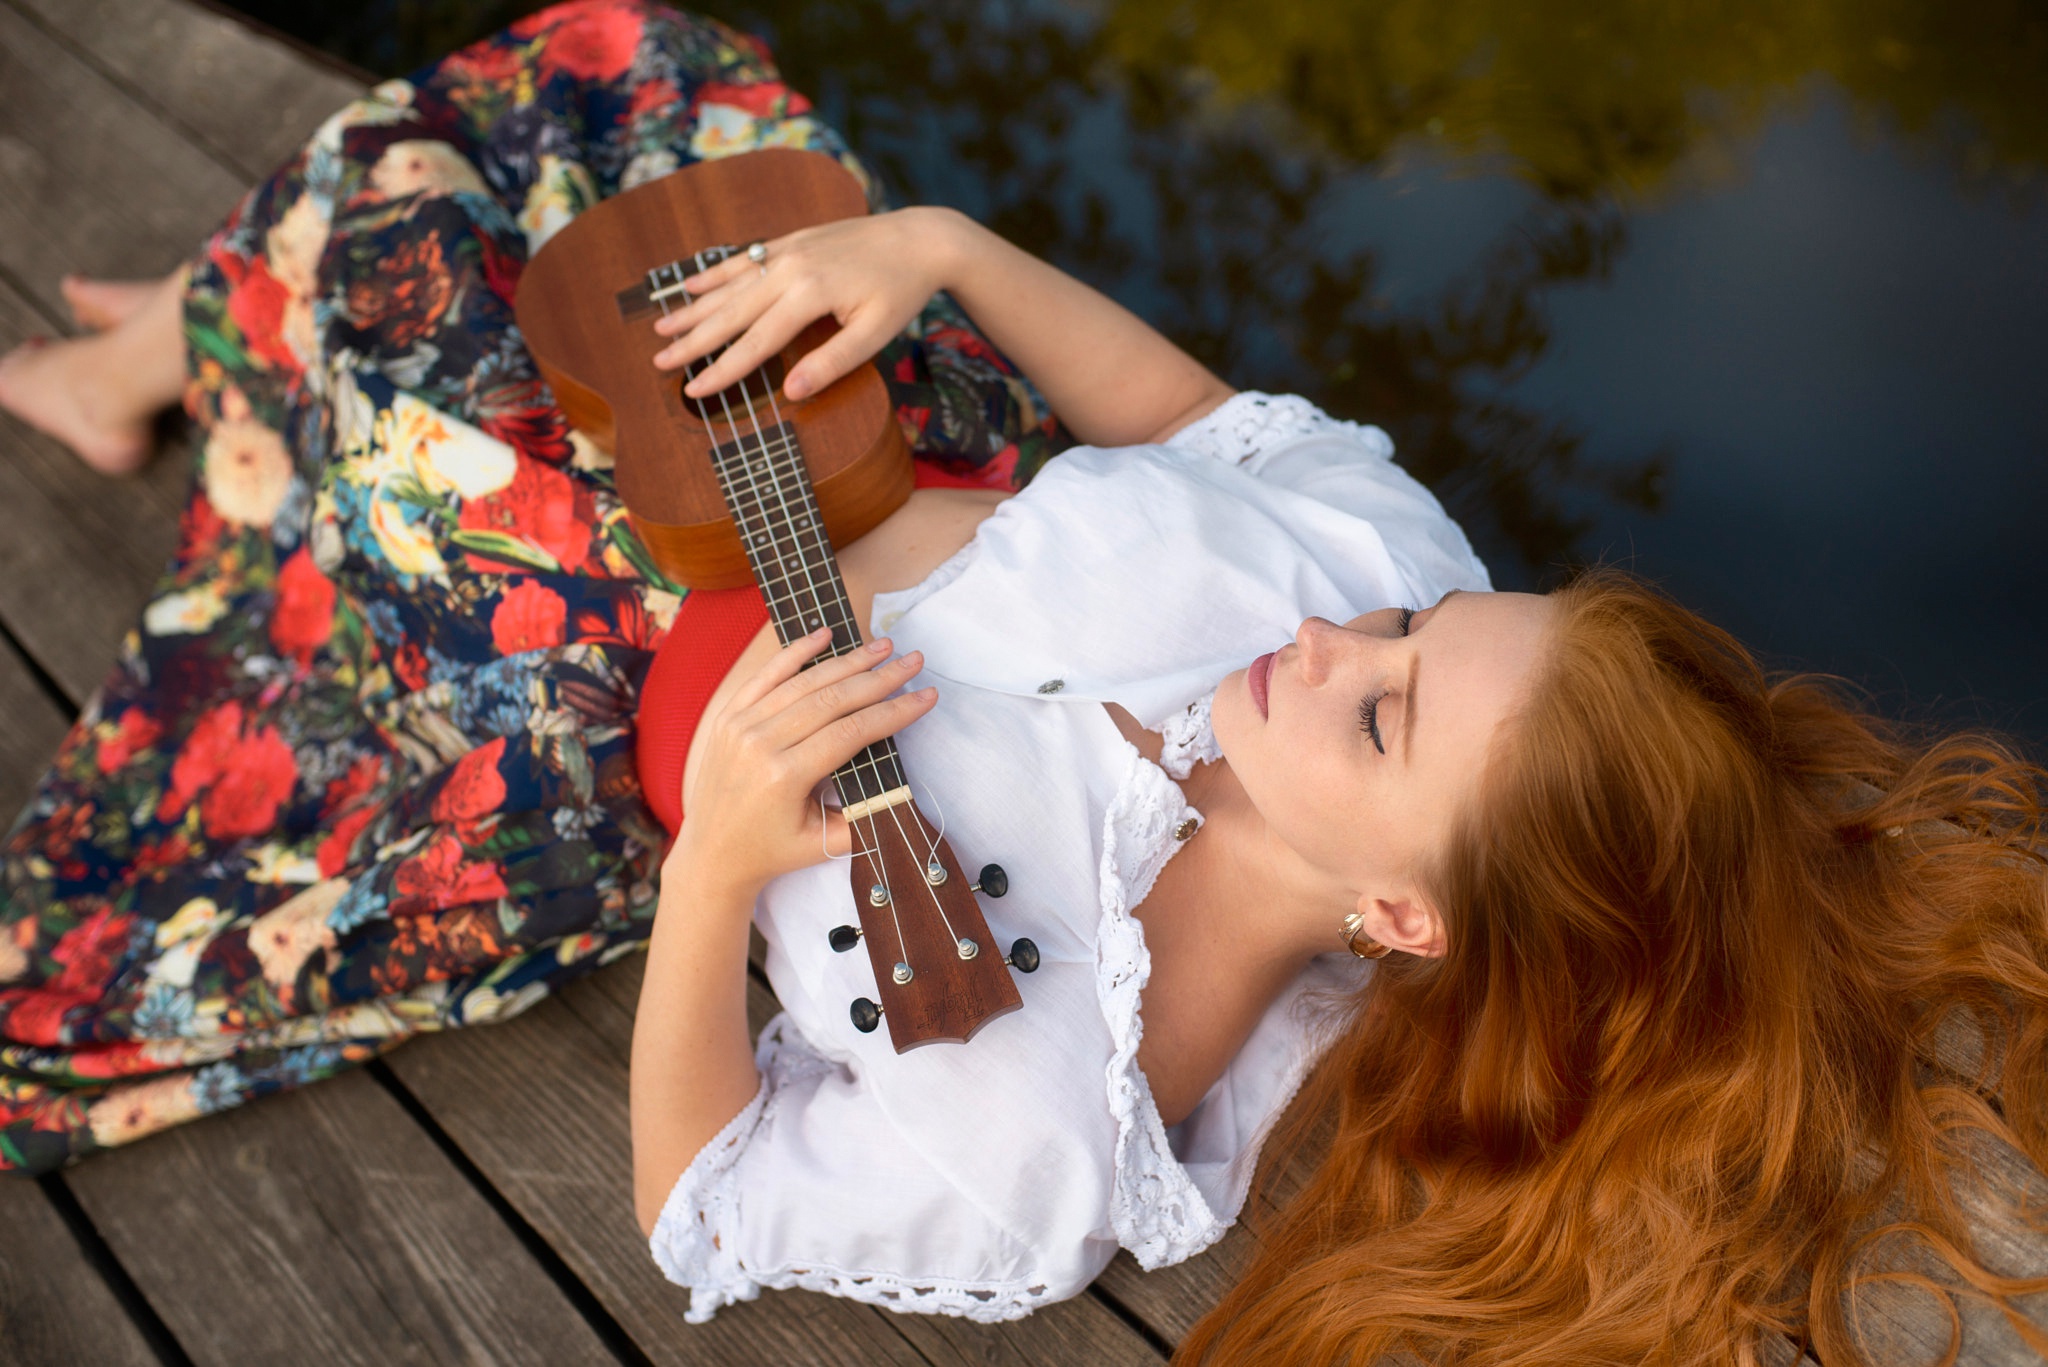 ukulele, lying down, women, mood, guitar, instrument, model, redhead